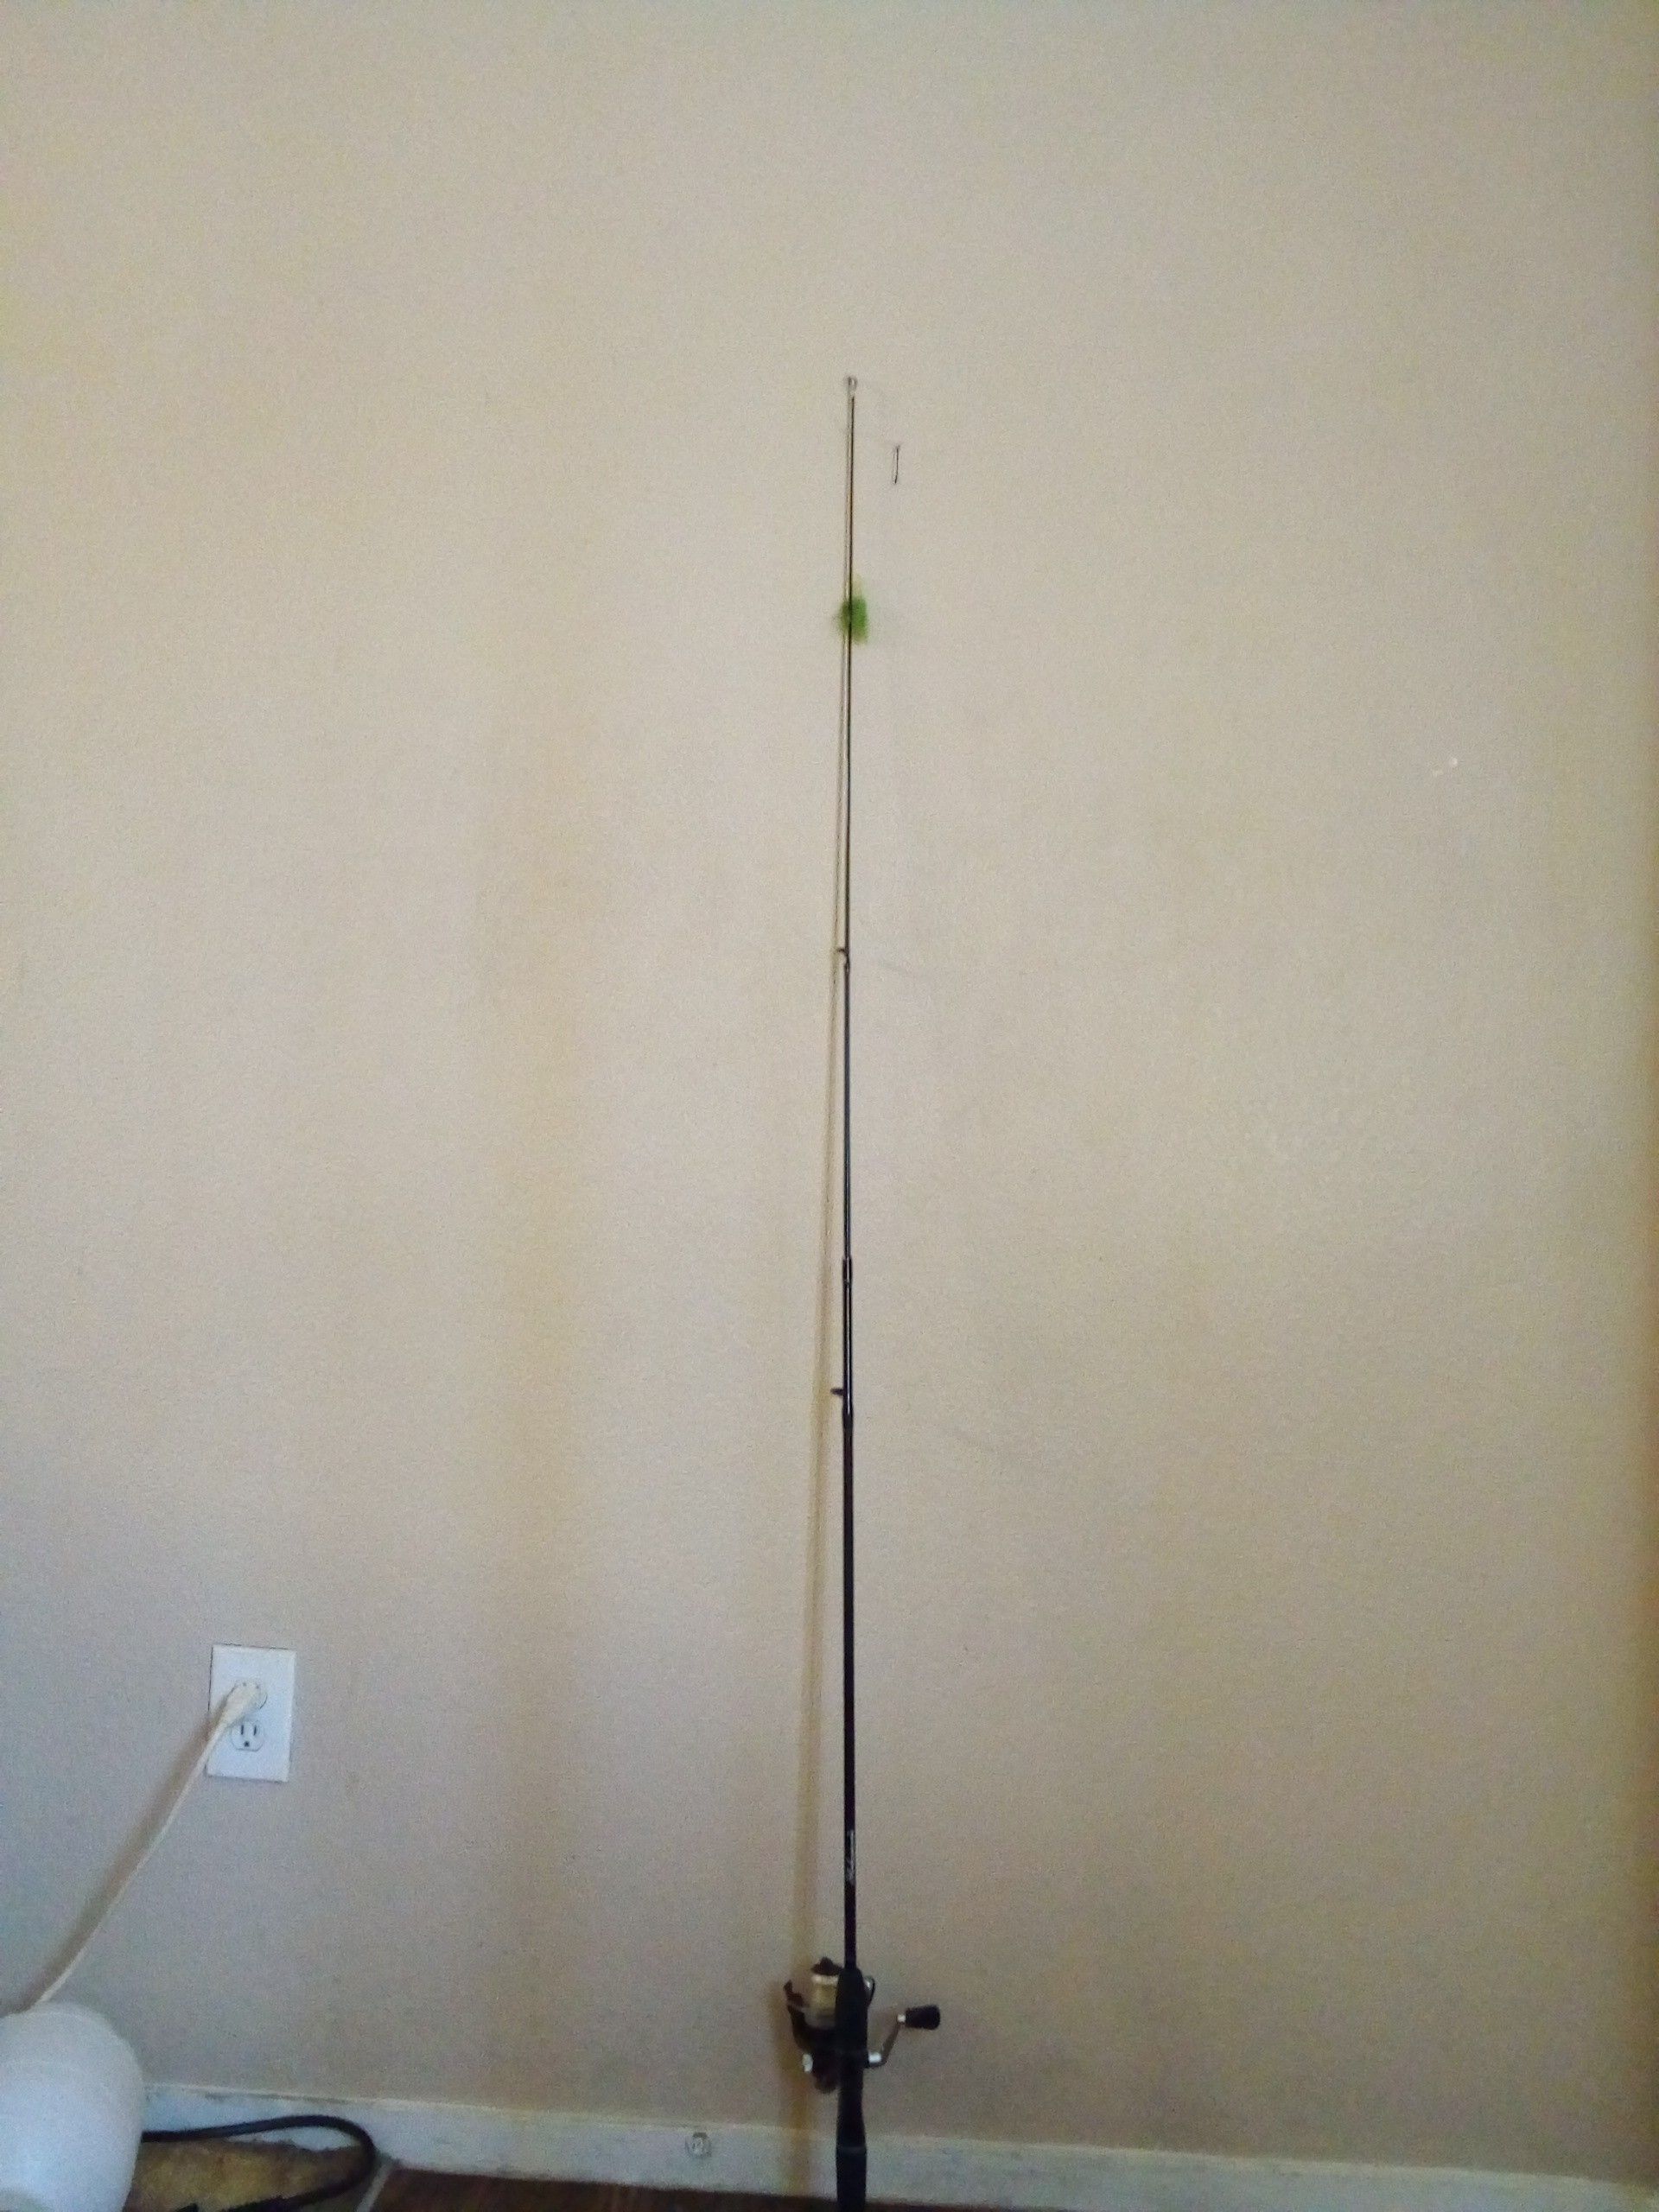 Fishing pole